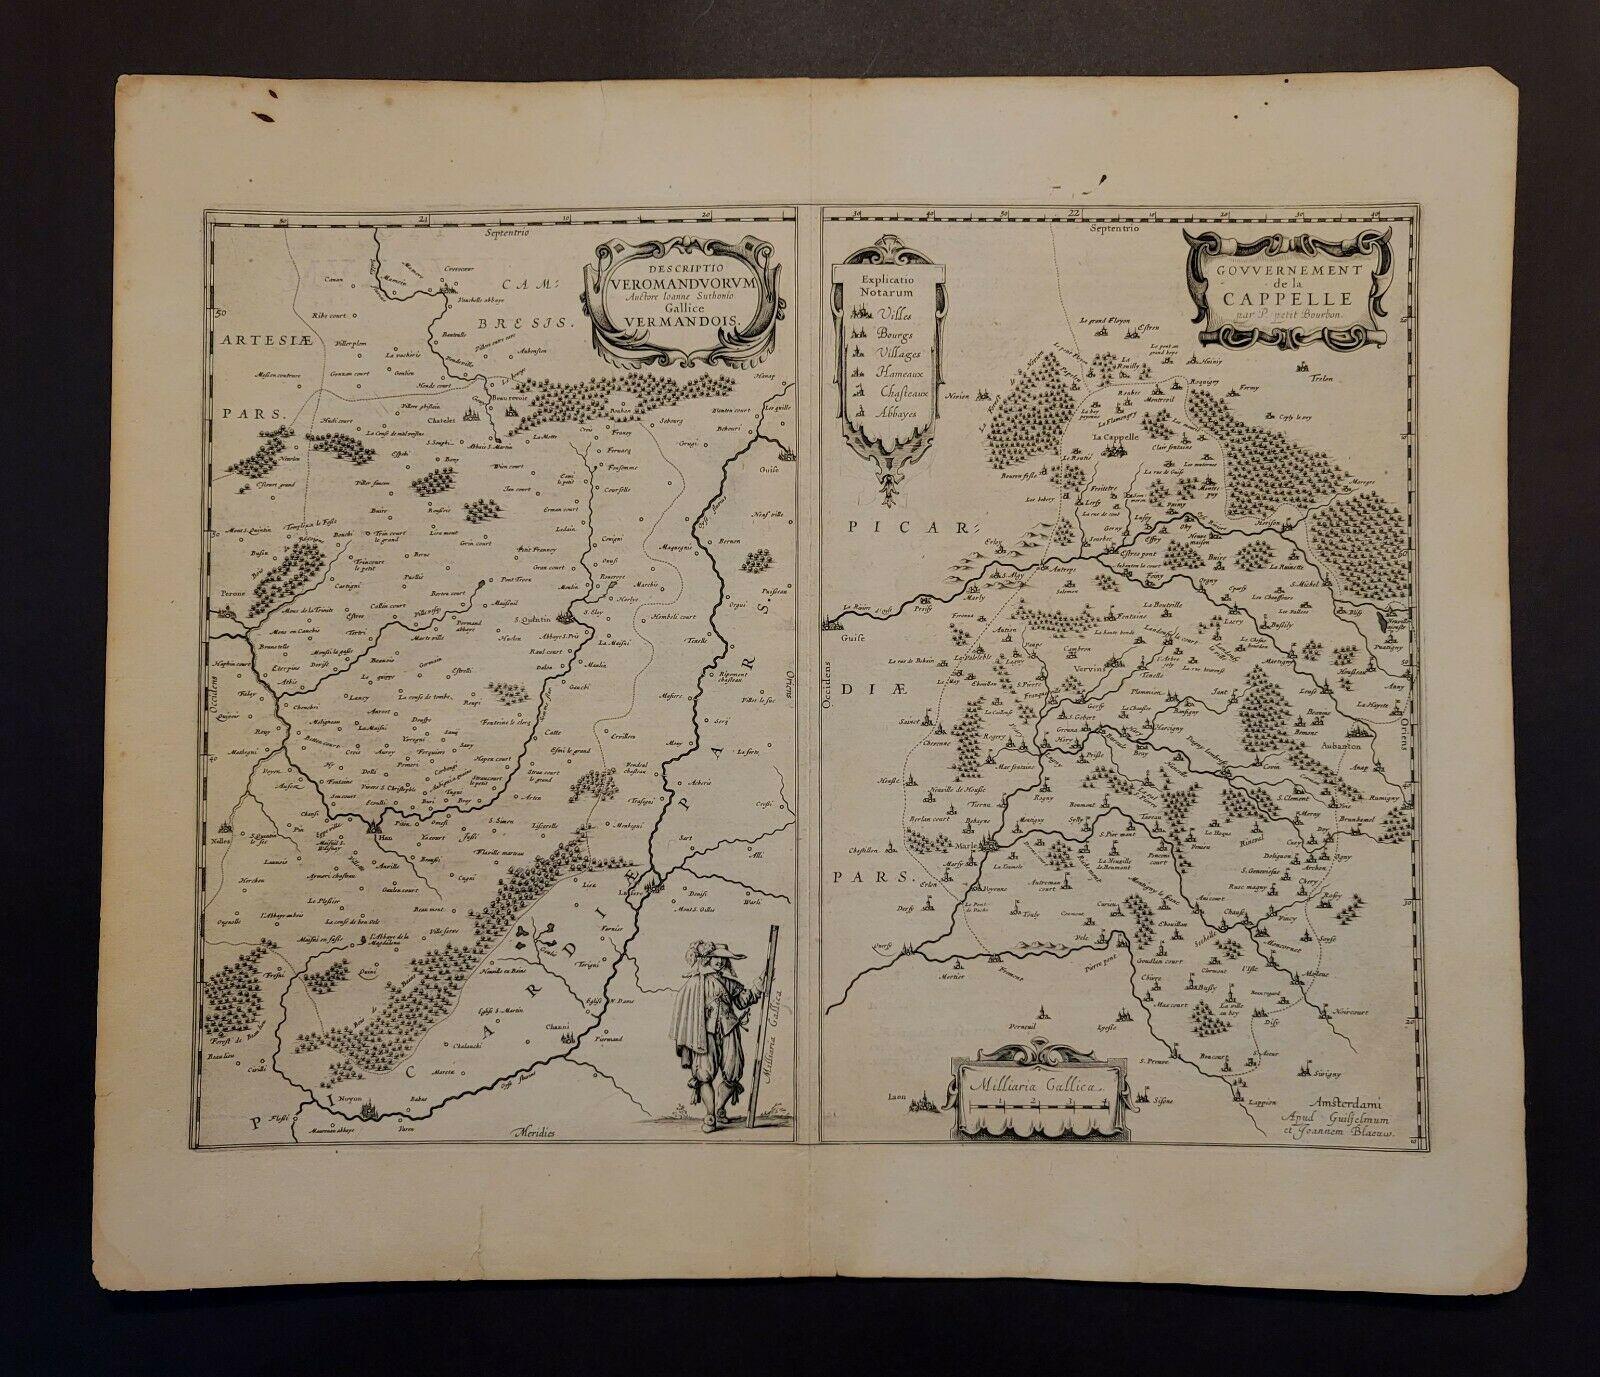 1657 Janssonius map of 
Vermandois and Cappelle
 Ric.a004

Description: Antique map of France titled 'Descriptio Veromanduorum - Gouvernement de la Cappelle'. Two detailed maps of France on one sheet. The Vermandois map is centered on the Oyse